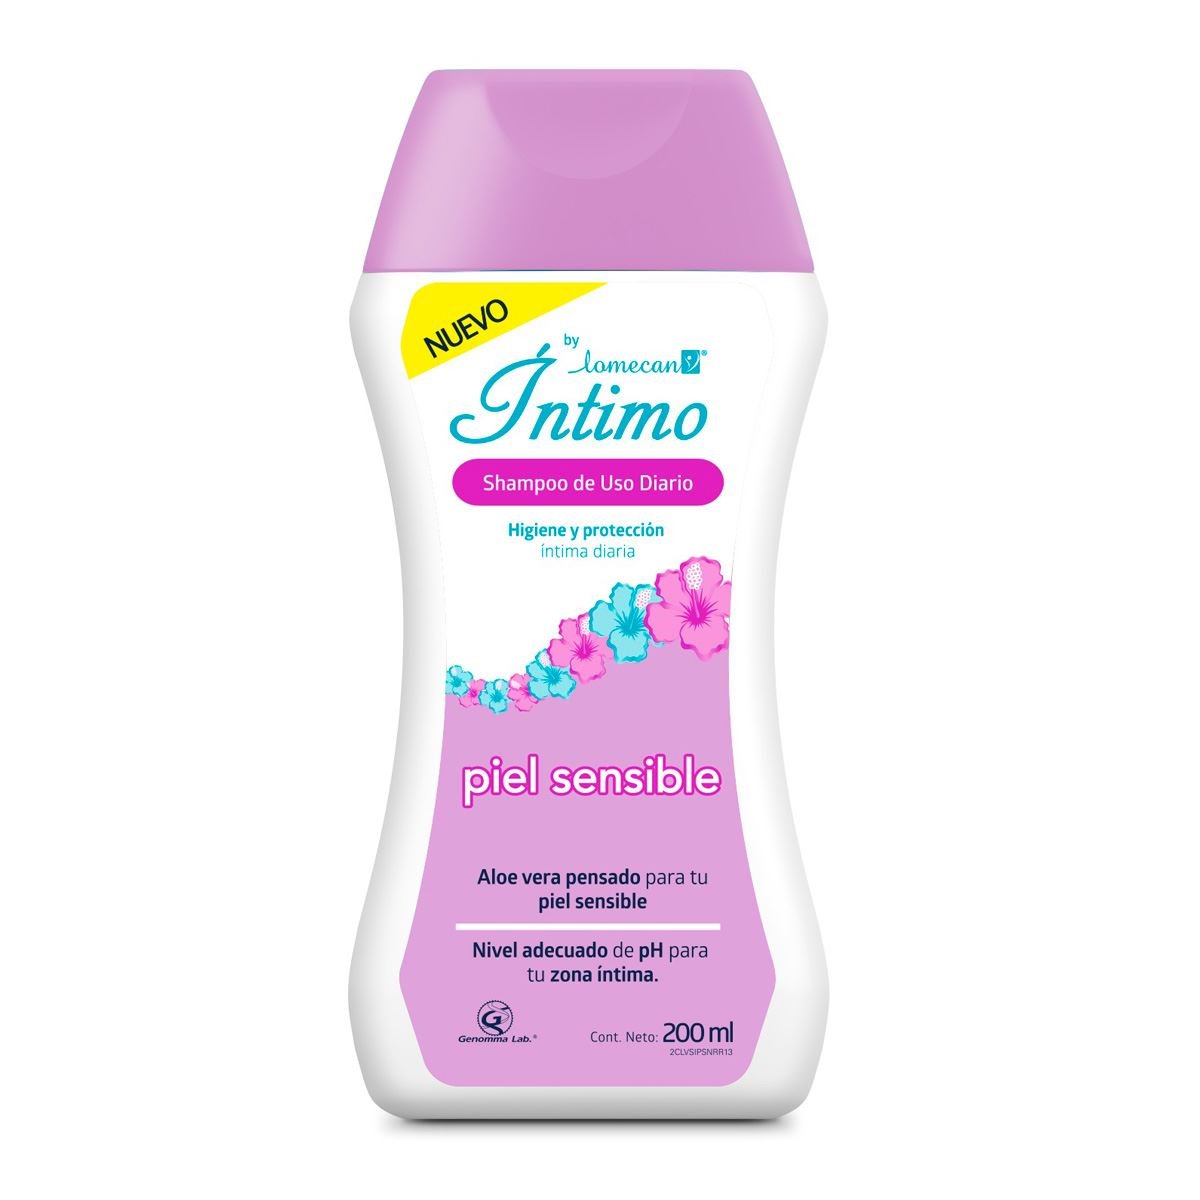 Lomecan V Shampoo Intimo Piel Sensible 200 ml